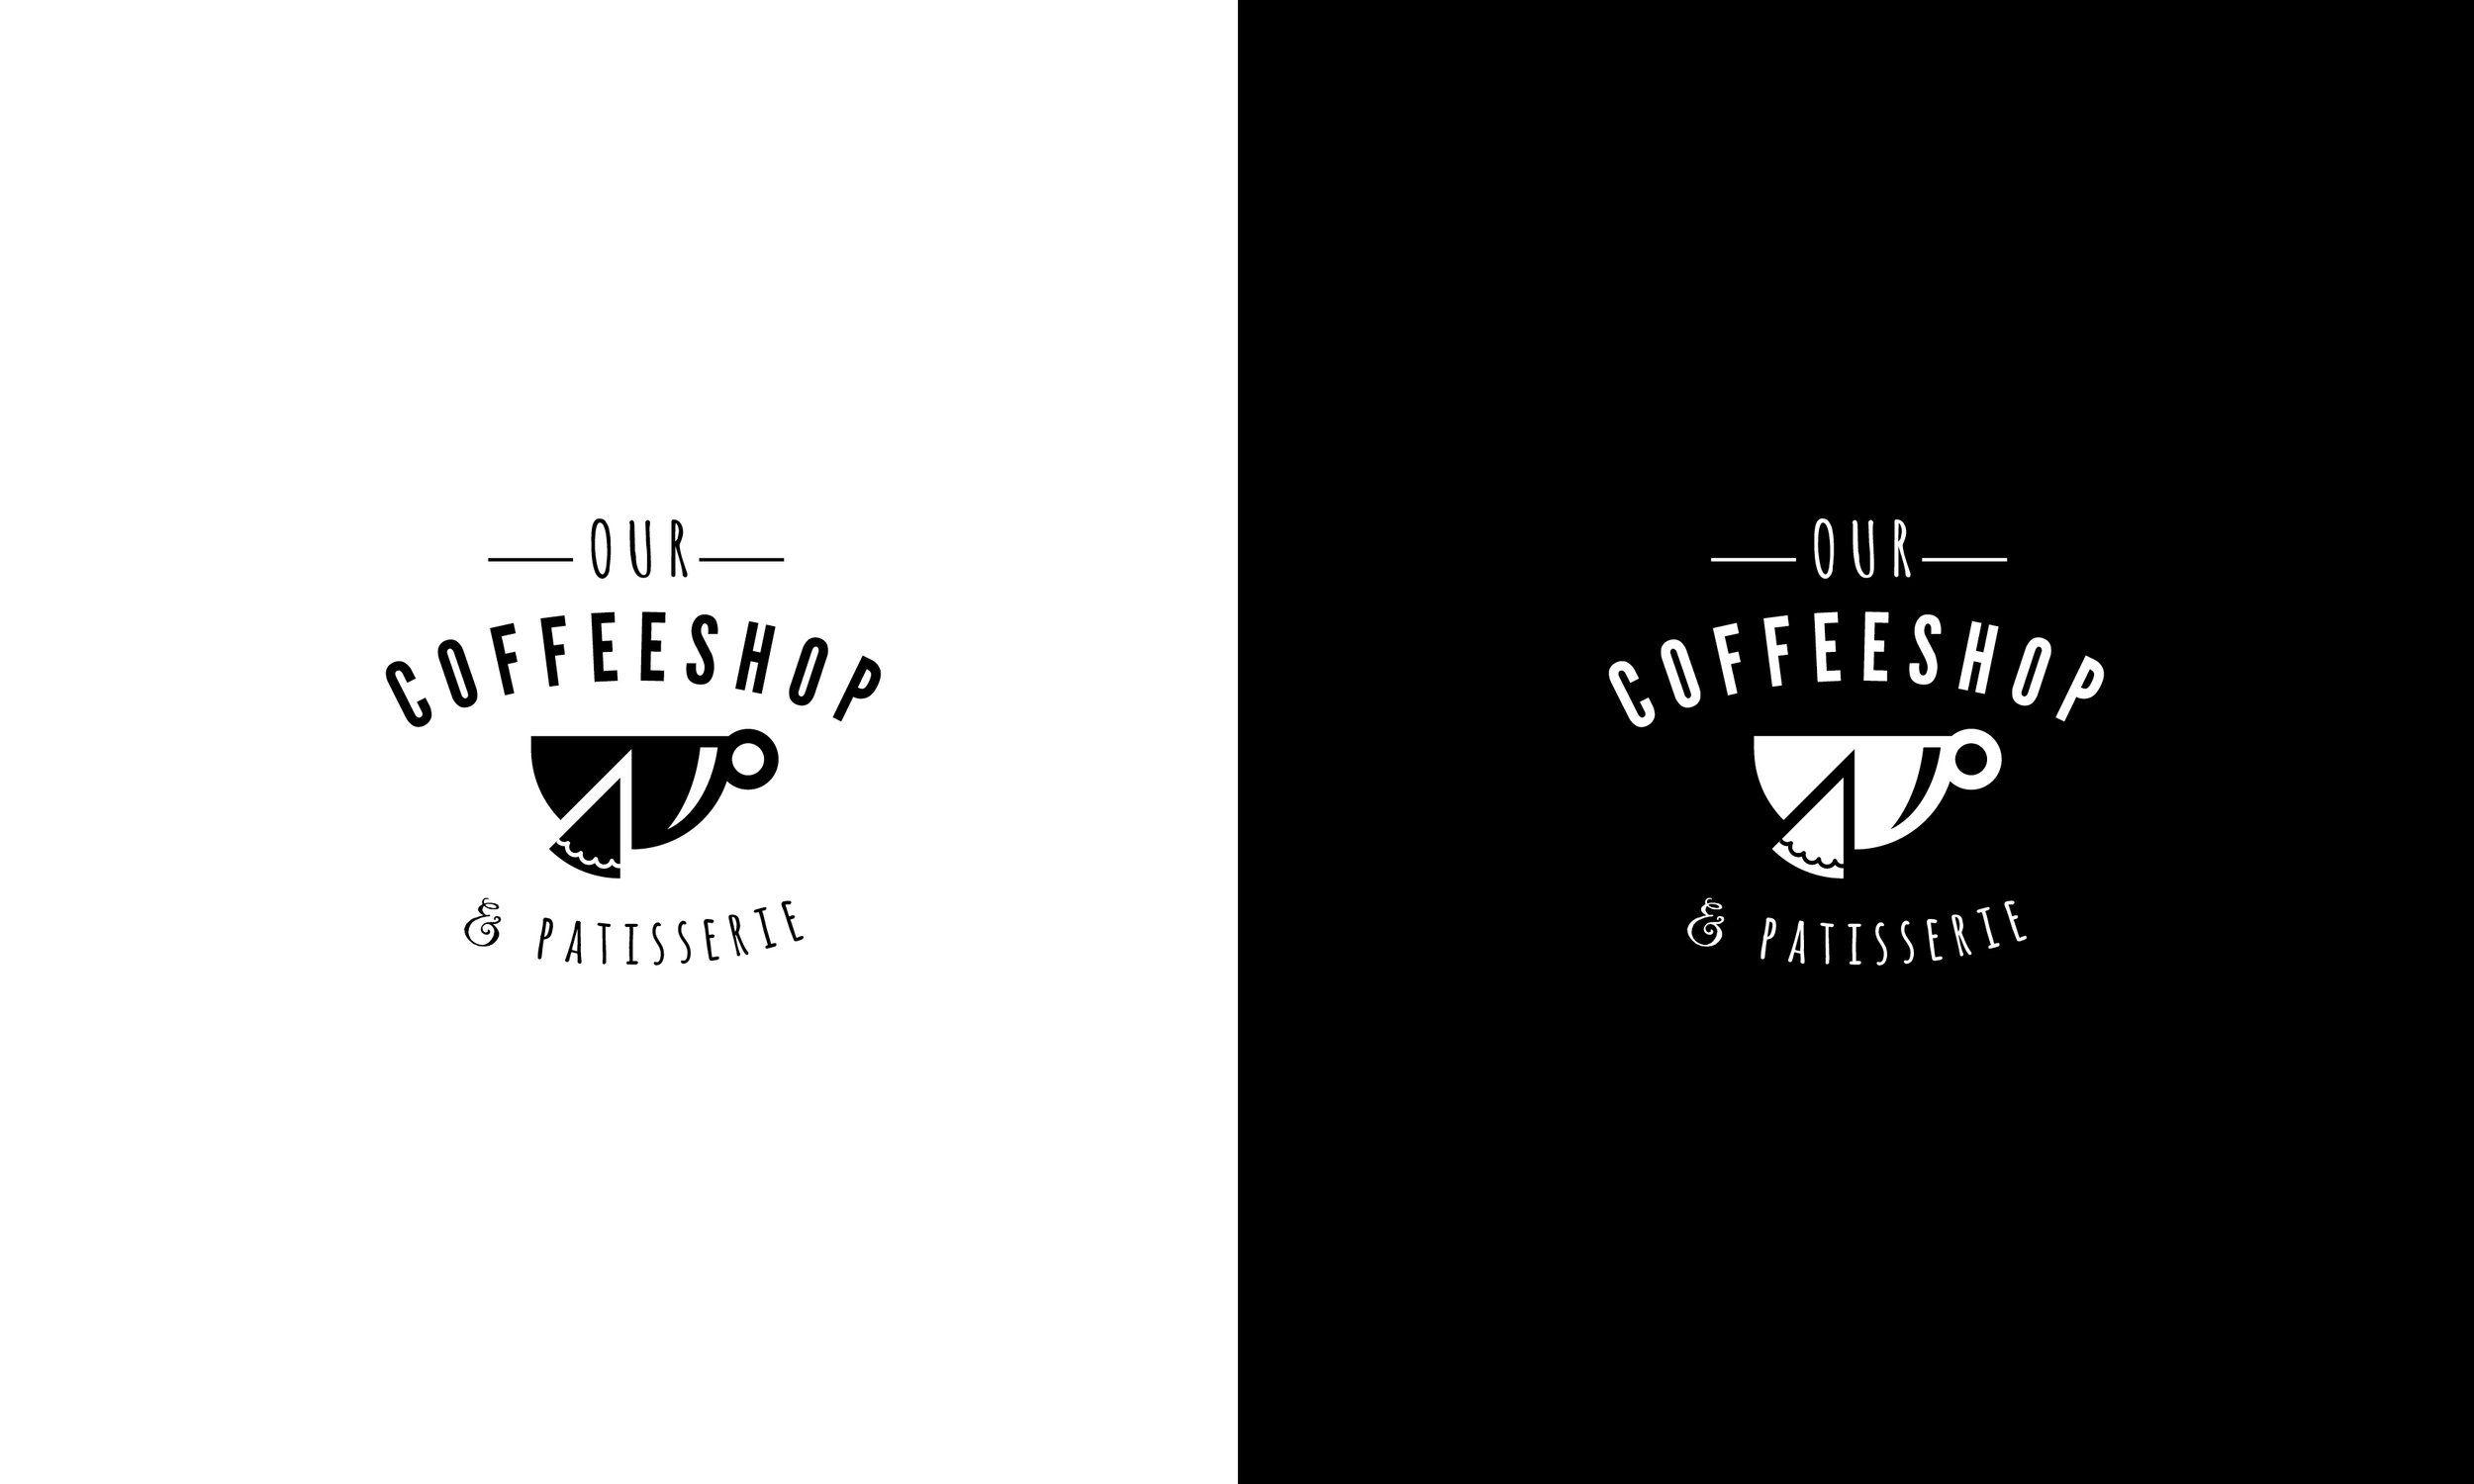 Coffee Shop Brand Logo - Our Coffee Shop & Patisserie: logo + branding — Lionheart Ink